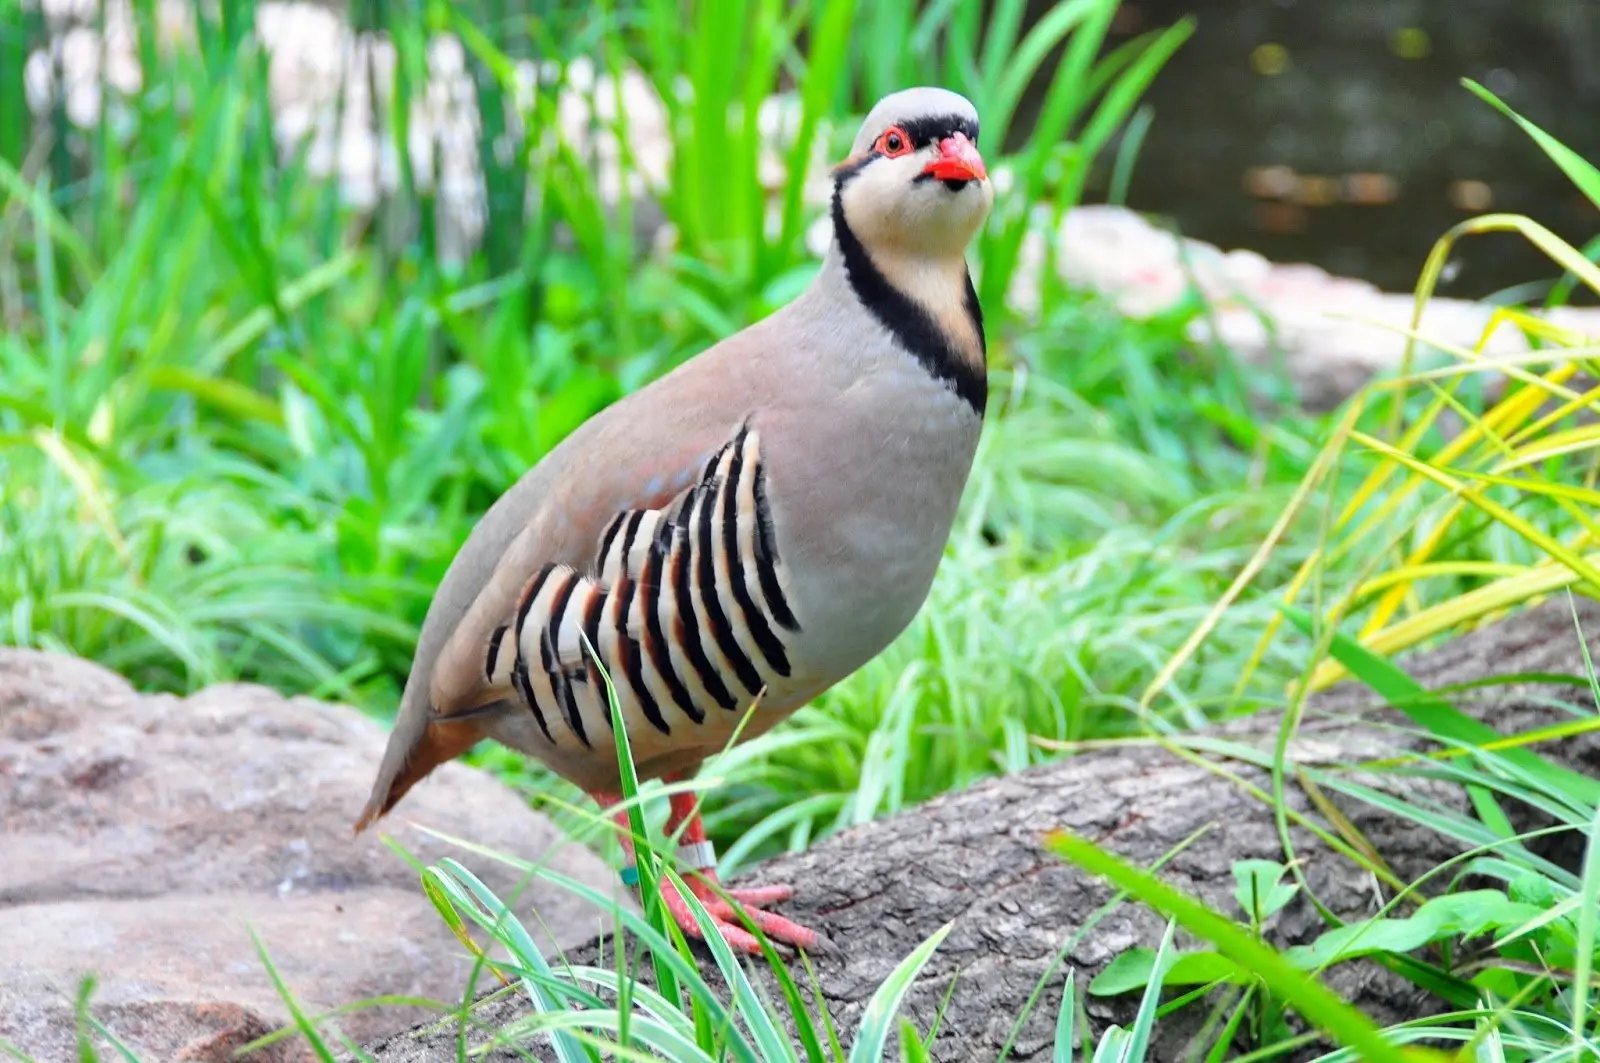 Chukar, also known as the chukar partridge, is the national bird of pakistan